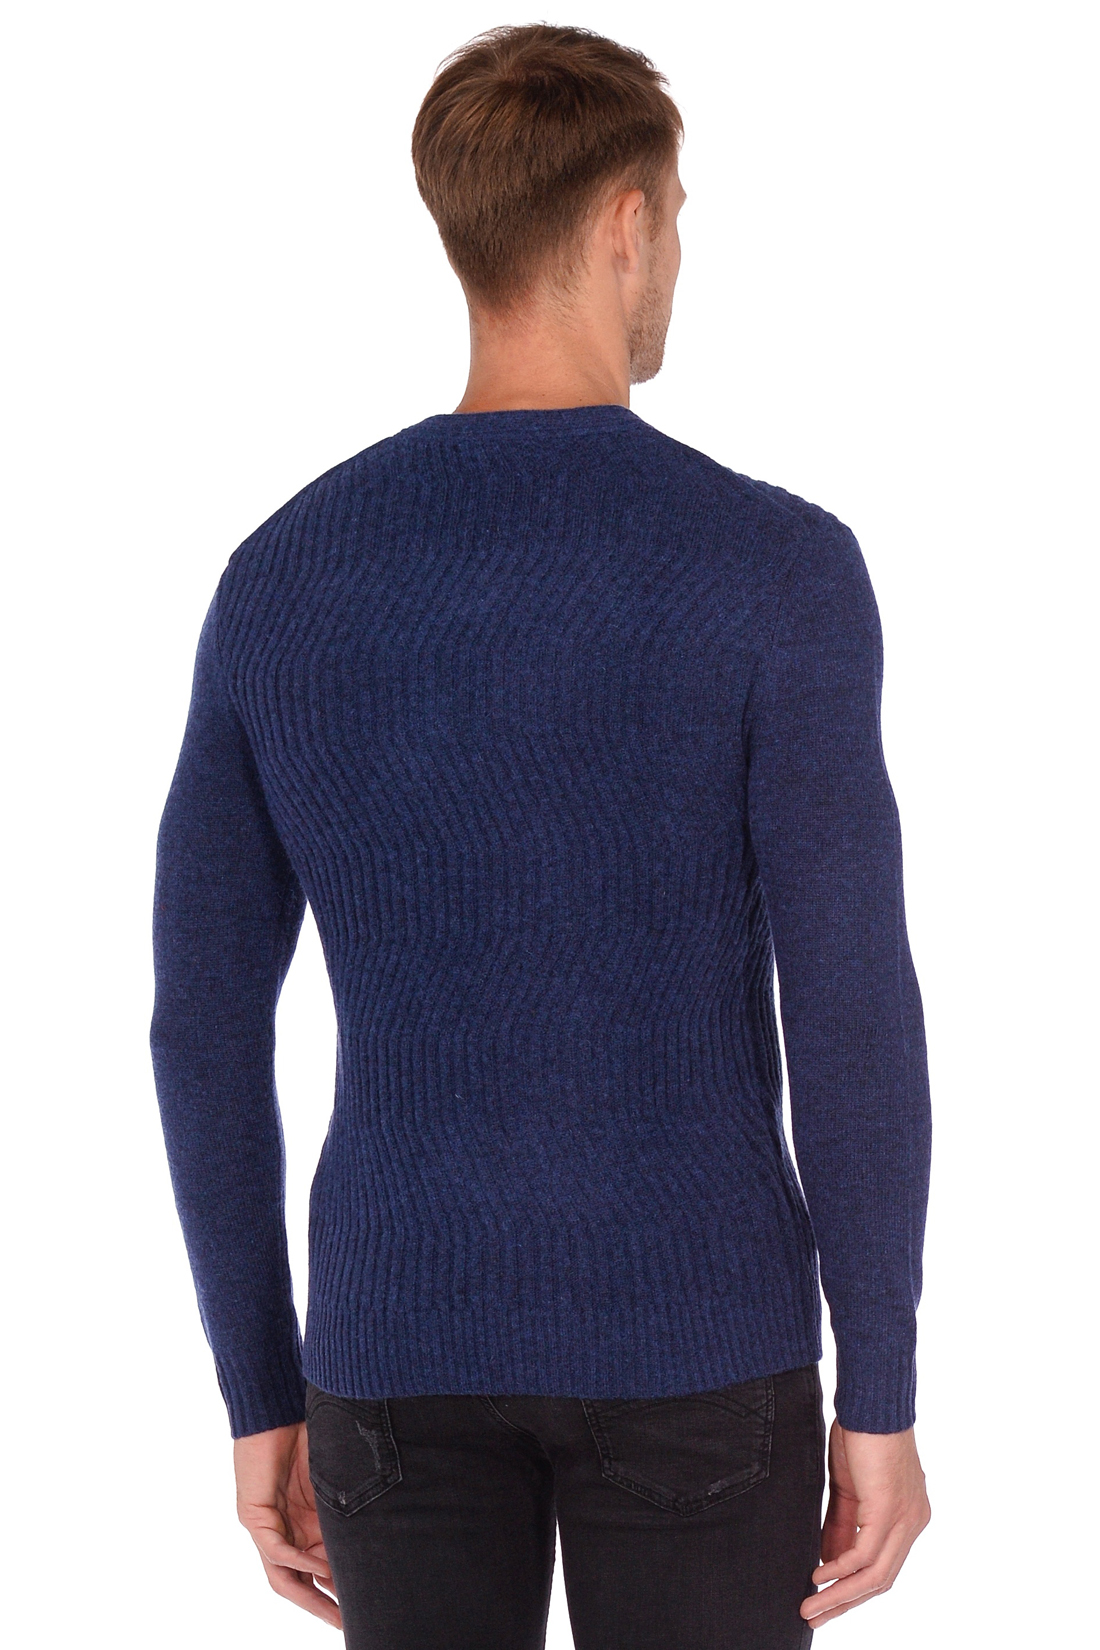 Пуловер с волнистым рисунком (арт. baon B638570), размер XXL, цвет baltic blue melange#синий Пуловер с волнистым рисунком (арт. baon B638570) - фото 2